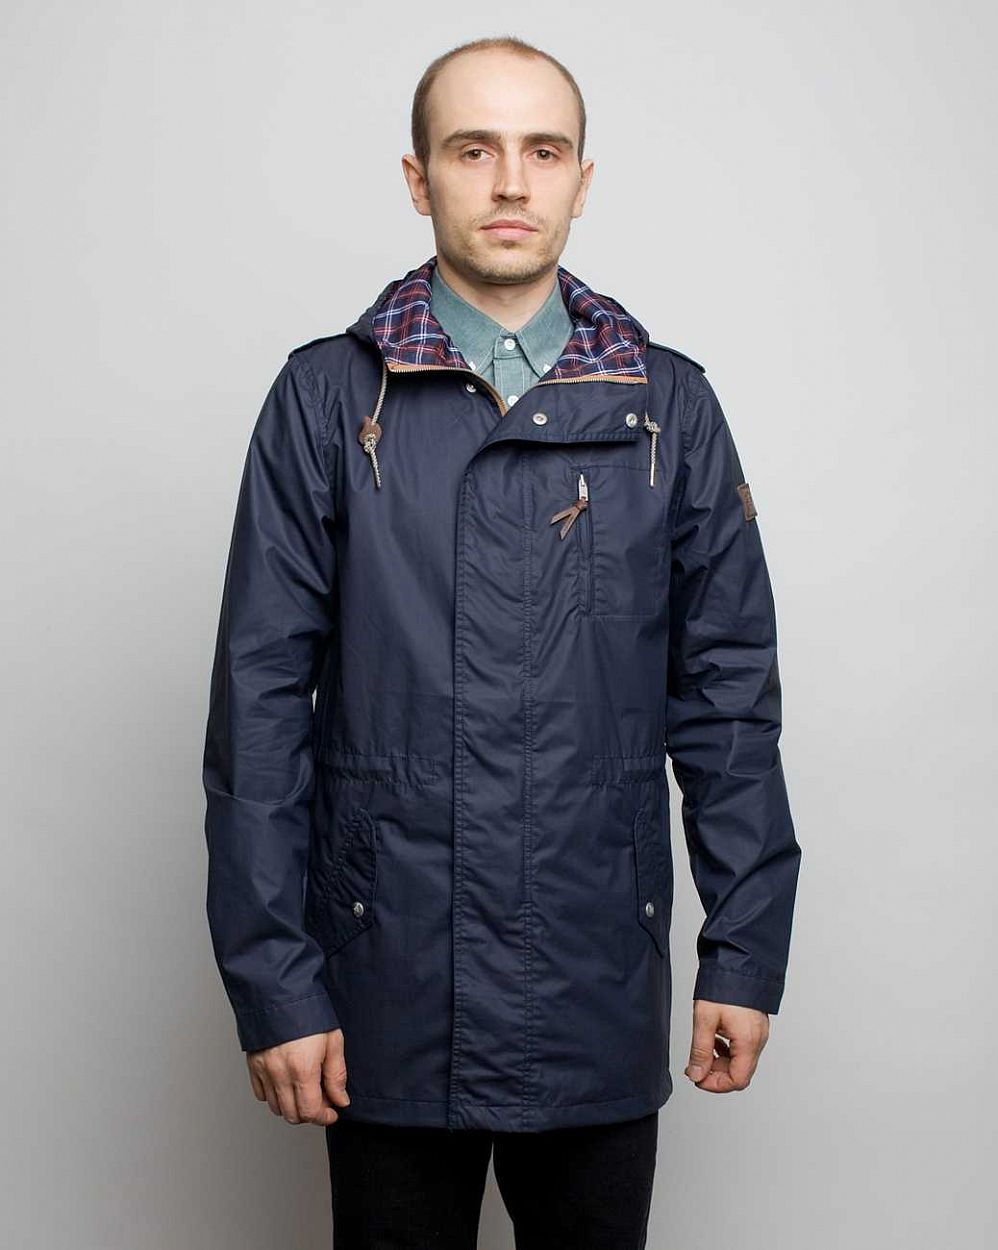 Куртка-Парка Loading Garments Supply Jacket Navy 1225 отзывы